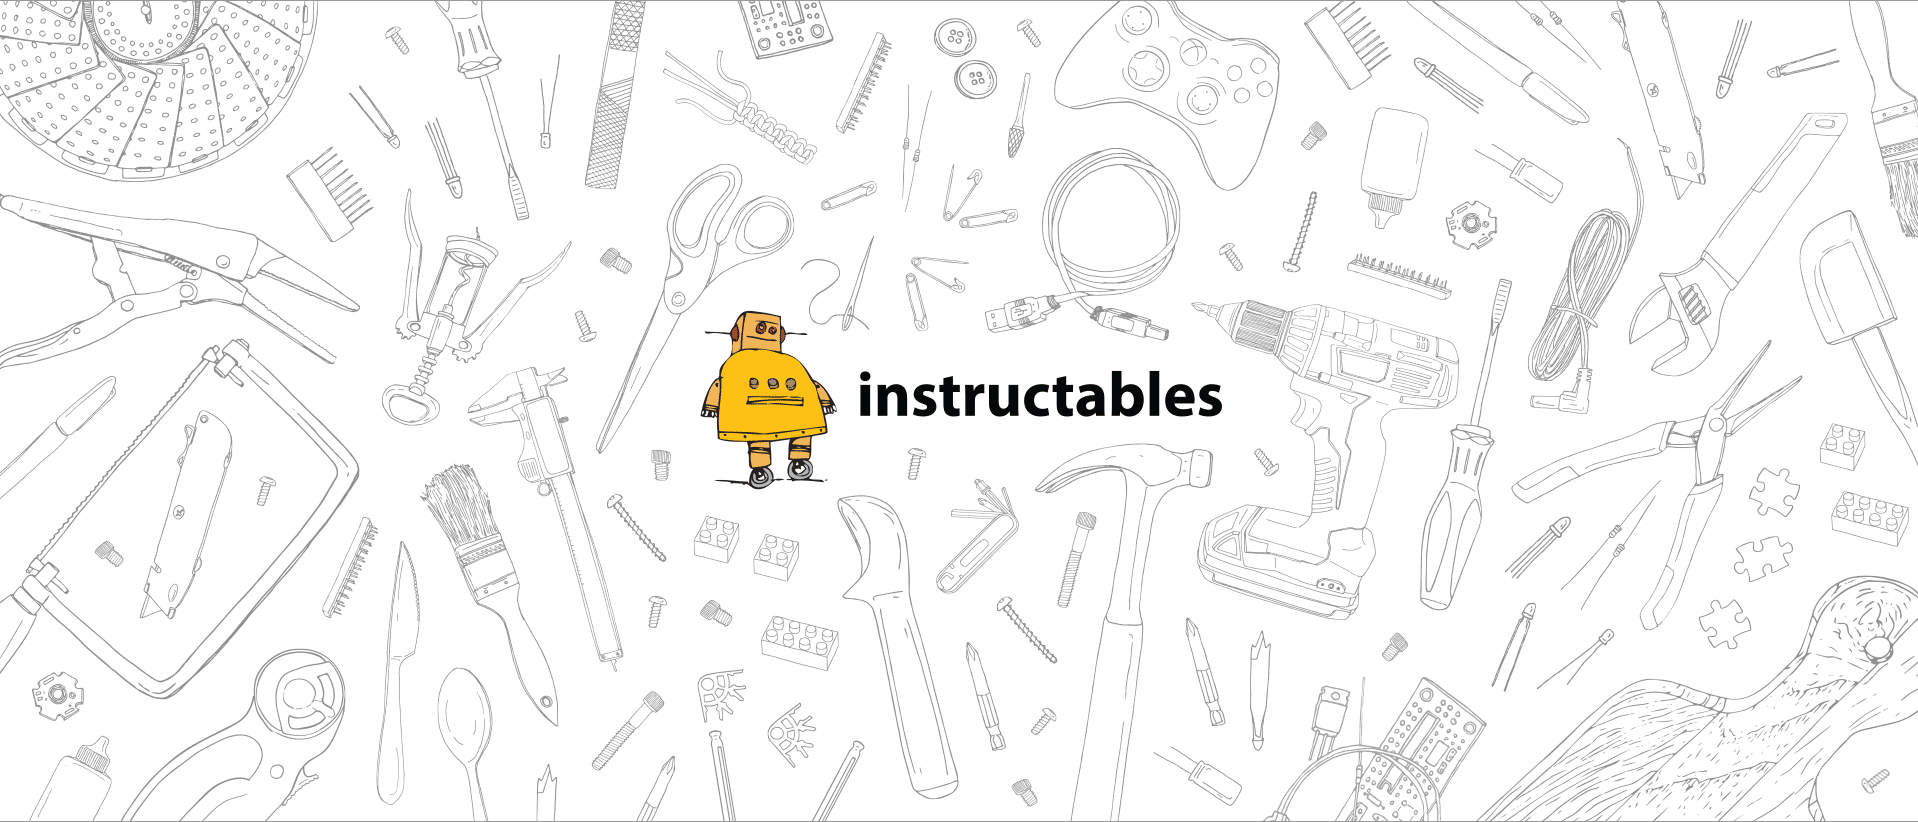 instructables logo